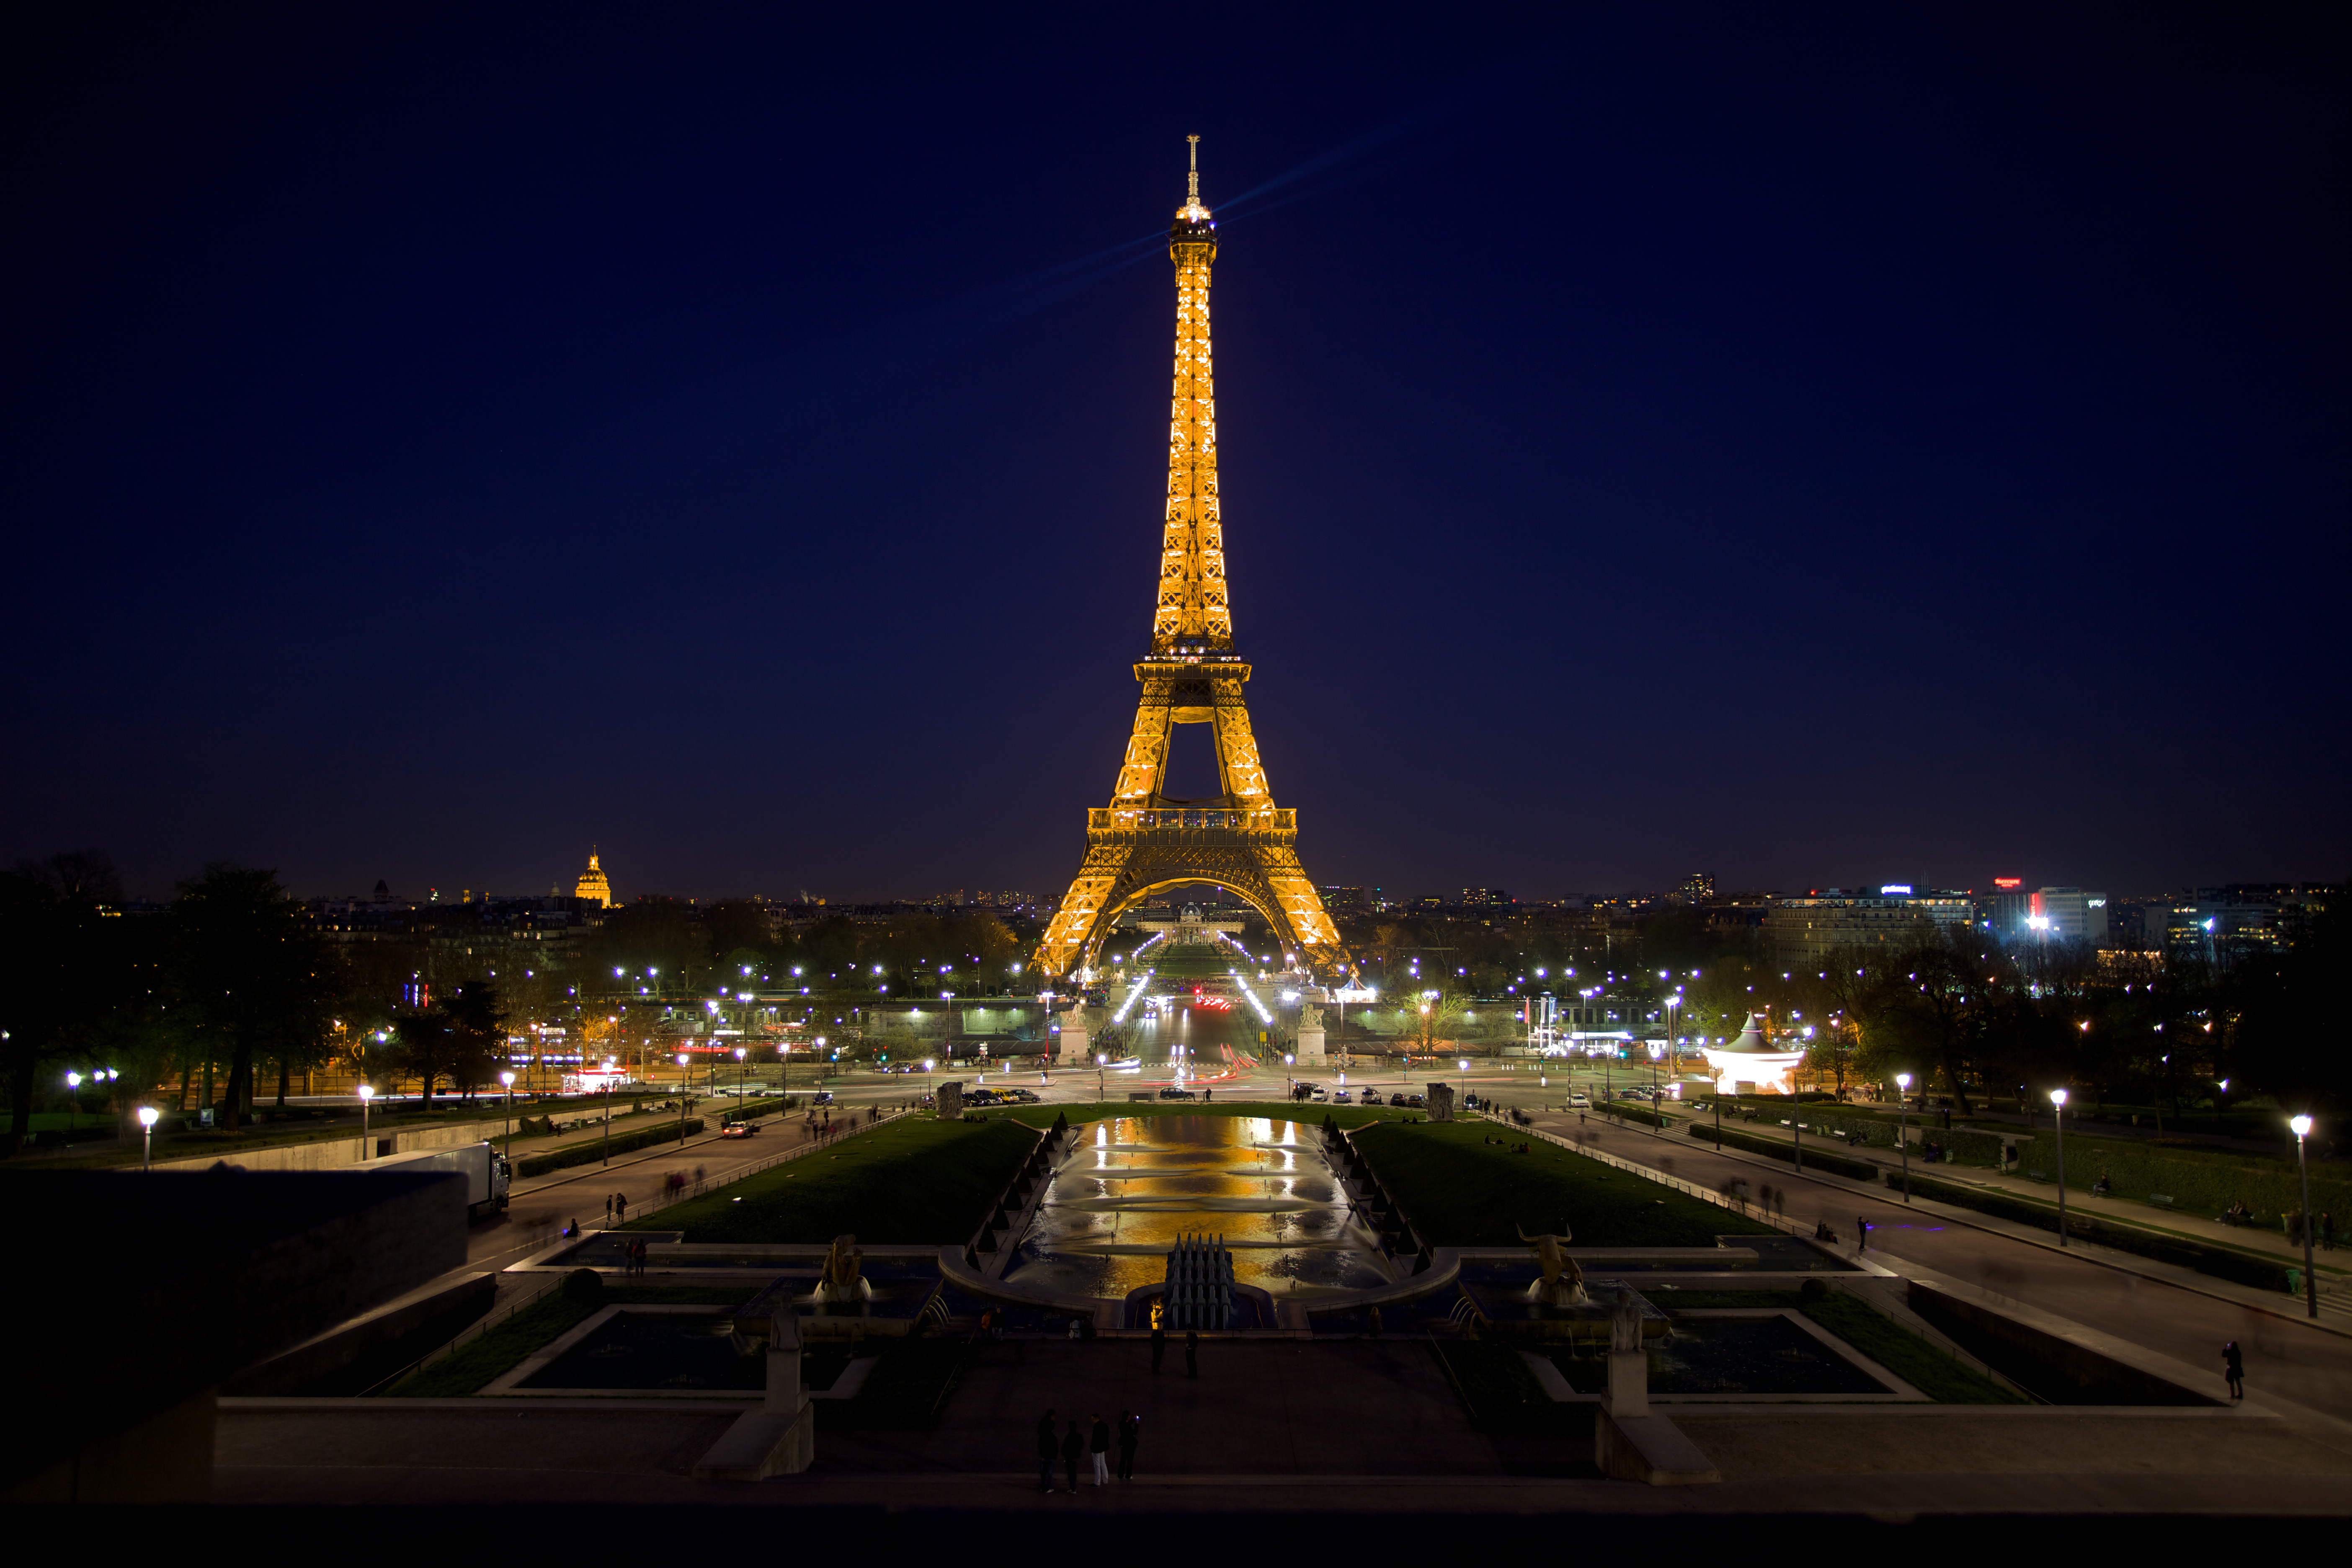 [72+] Eiffel Tower At Night Wallpaper on WallpaperSafari